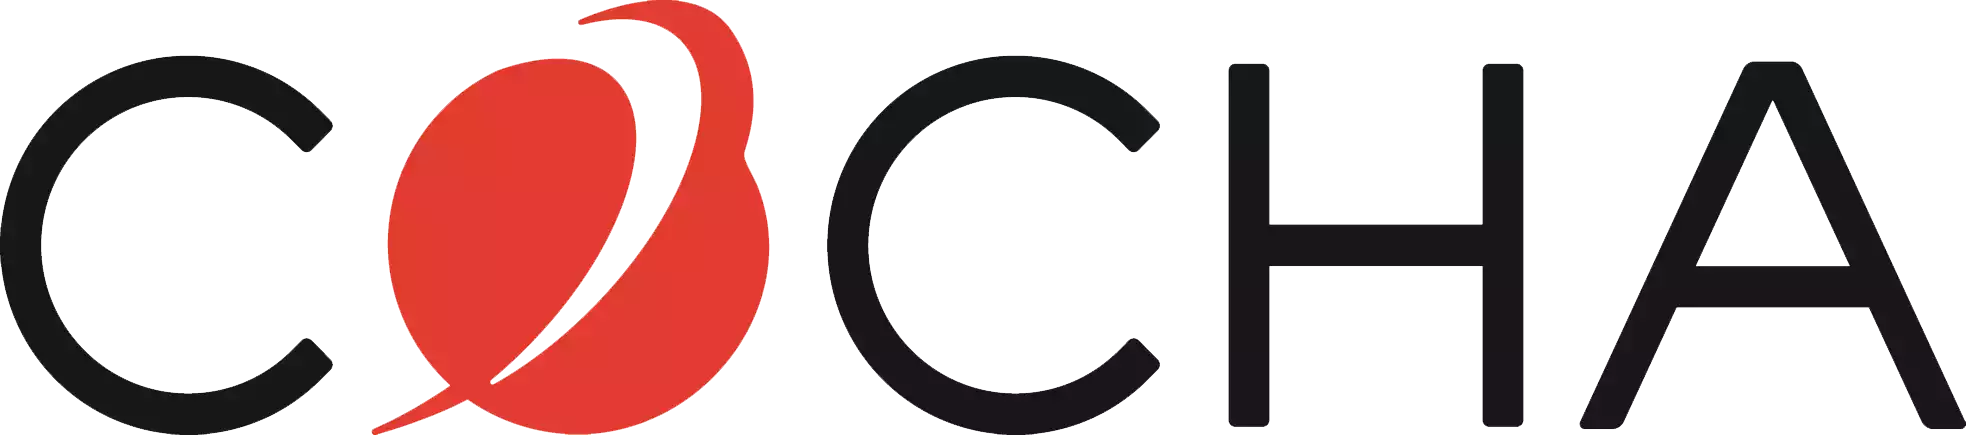 Logo Cocha